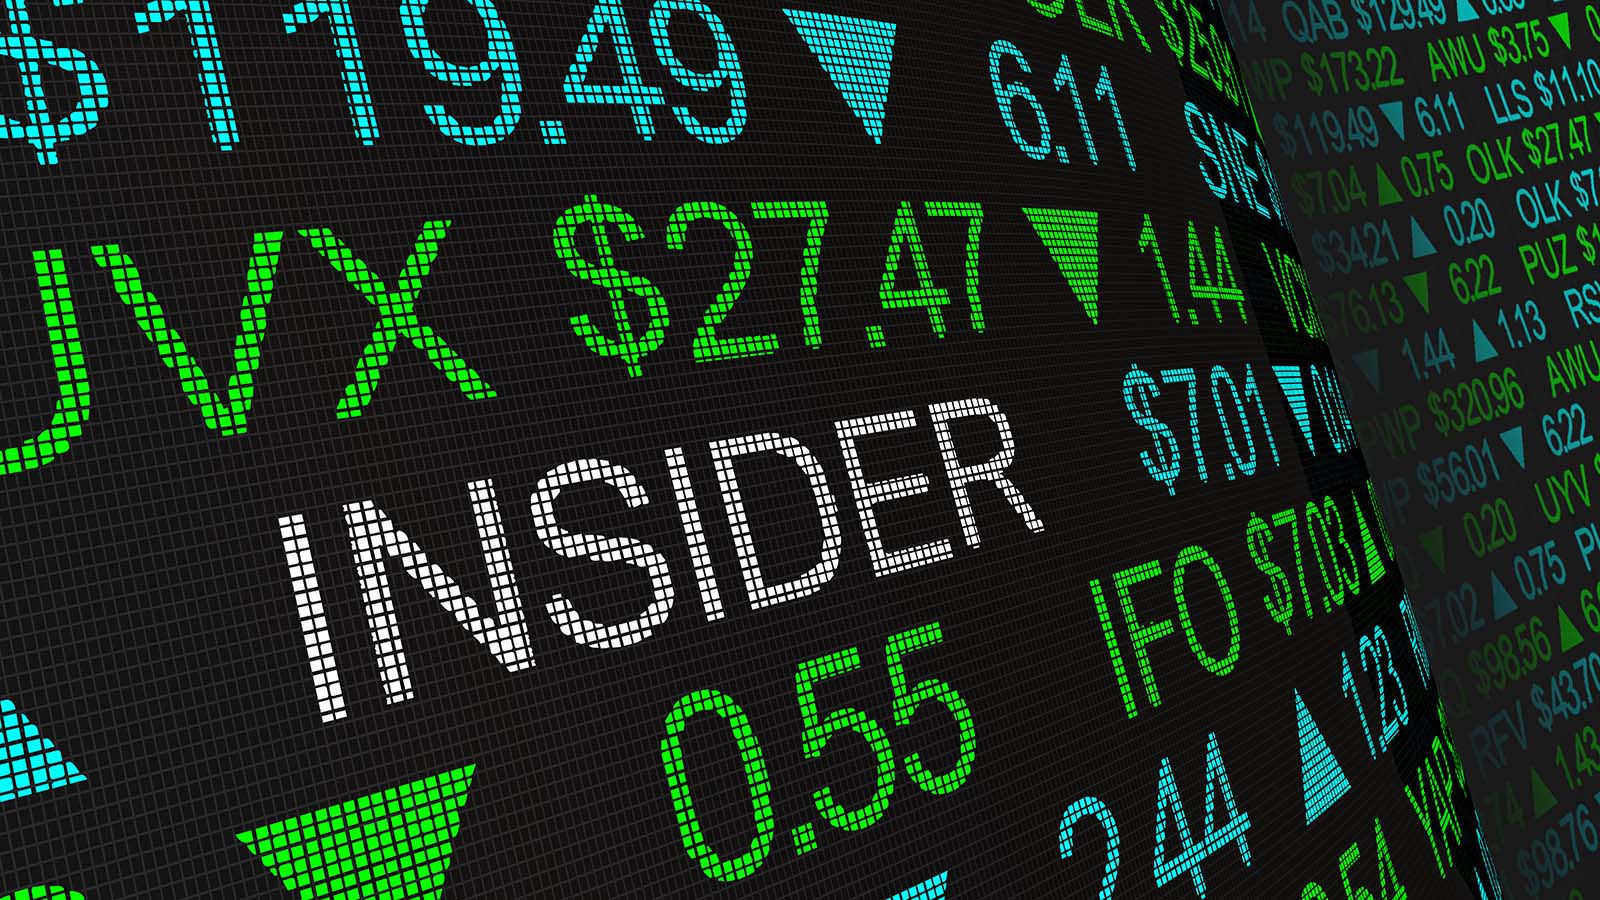 Insider Favorite Stocks - Insider Favorites: 7 Stocks with Bullish Buying Signals